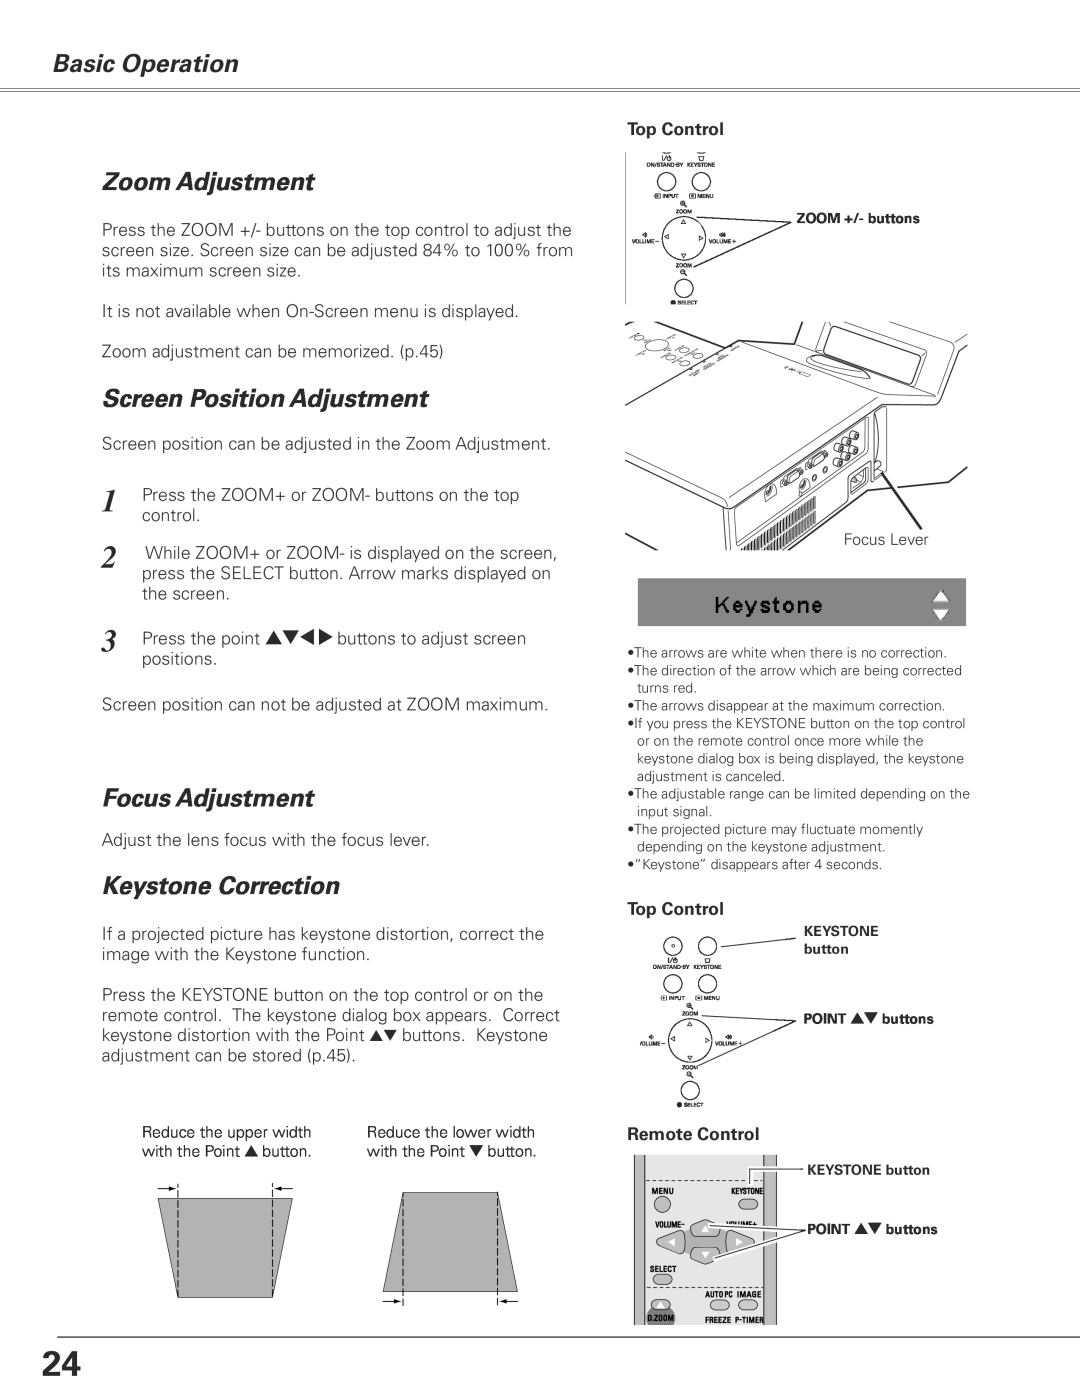 Sanyo PLC-XL50A Zoom Adjustment, Screen Position Adjustment, Focus Adjustment, Keystone Correction, Basic Operation 